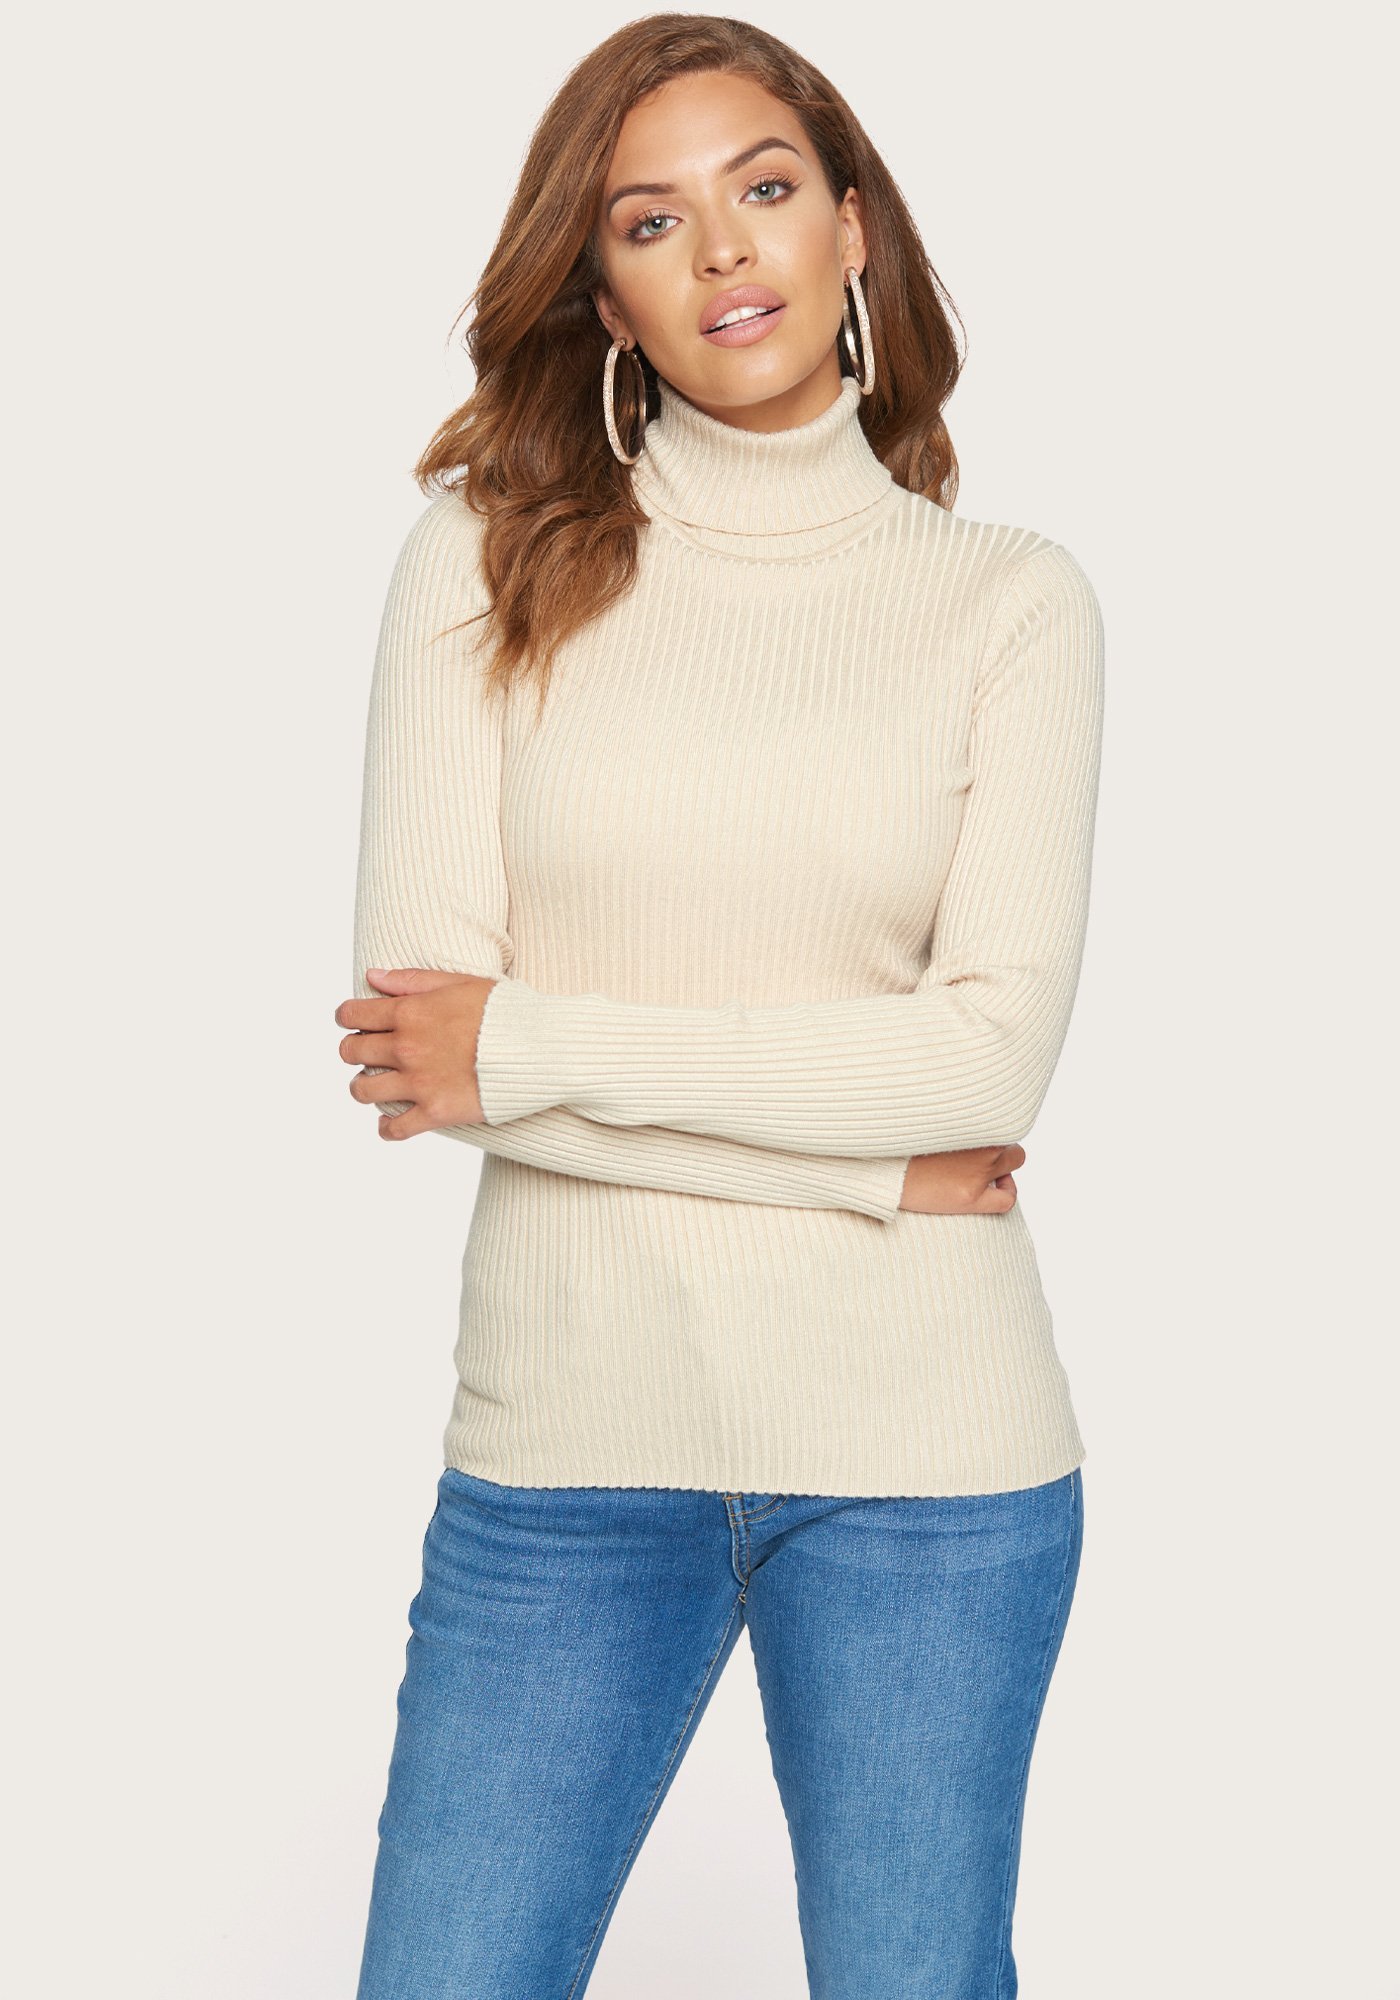 Bebe Women's Turtleneck Sweater, Size Medium in Sandshell Viscose/Nylon